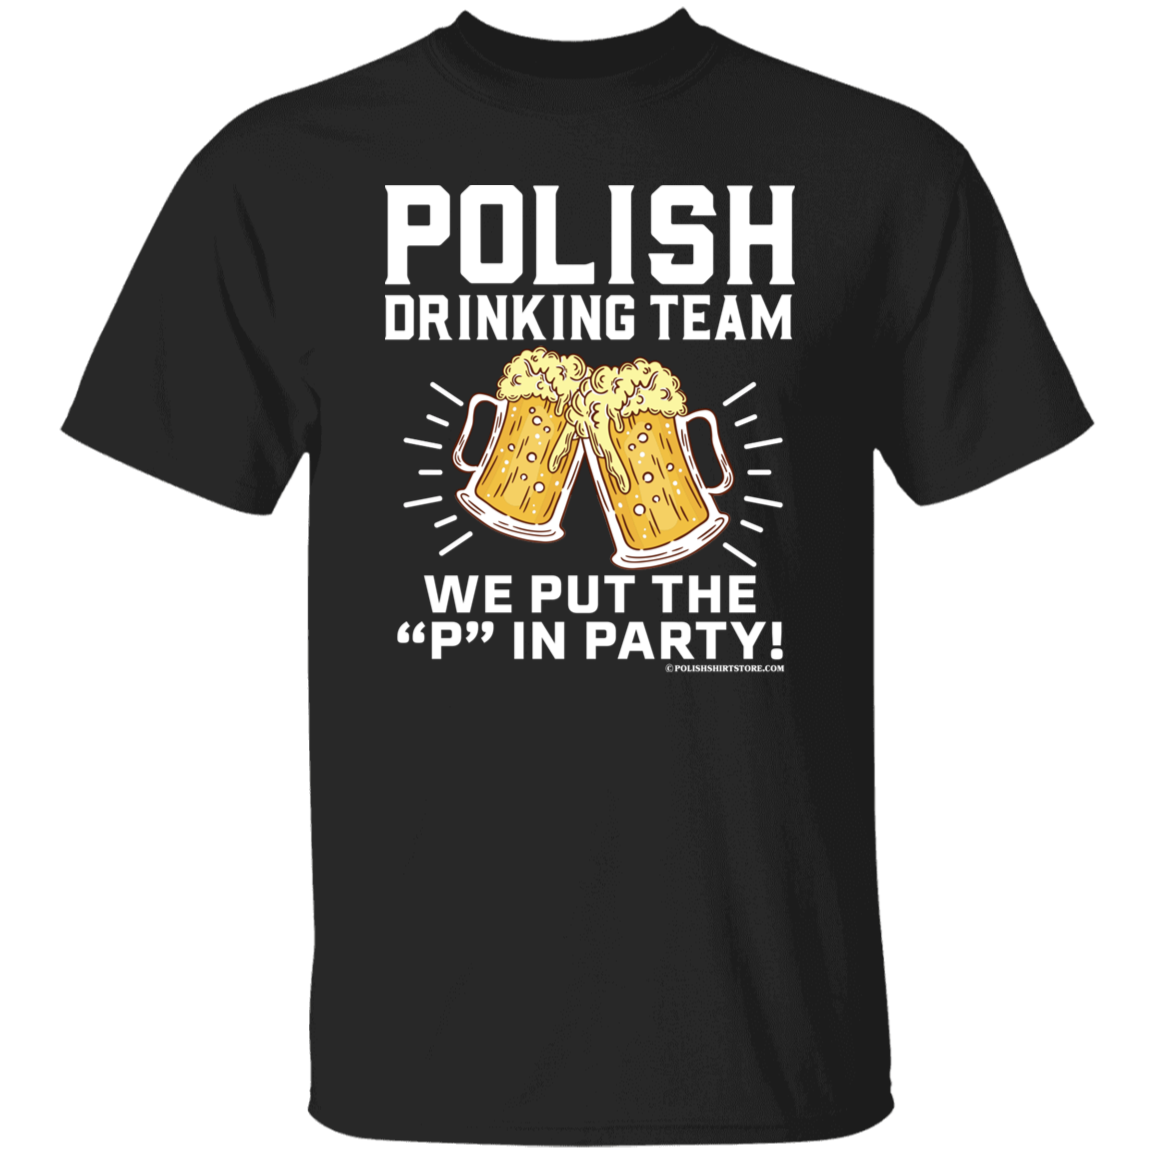 Polish Drinking Team We Put The P in Party Apparel CustomCat G500 5.3 oz. T-Shirt Black S